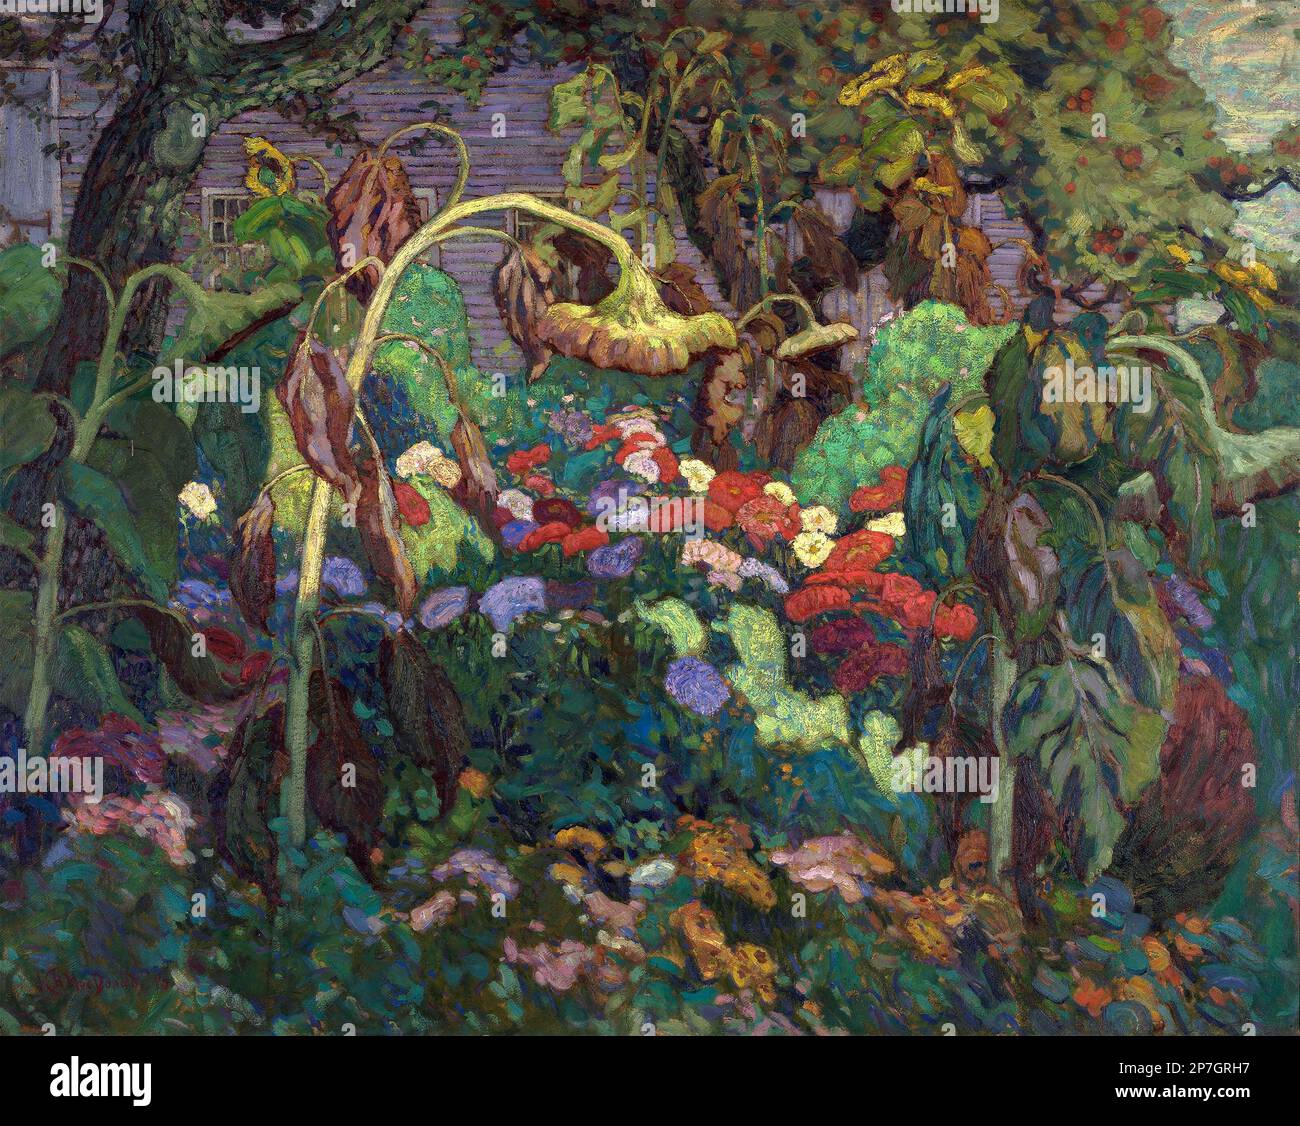 J. E. H. MACDONALD. Dipinto dal titolo "The Tangled Garden" dell'artista inglese-canadese James Edward Hervey MacDonald (1873-1932), olio su tavola da cavalcare, 1916 Foto Stock